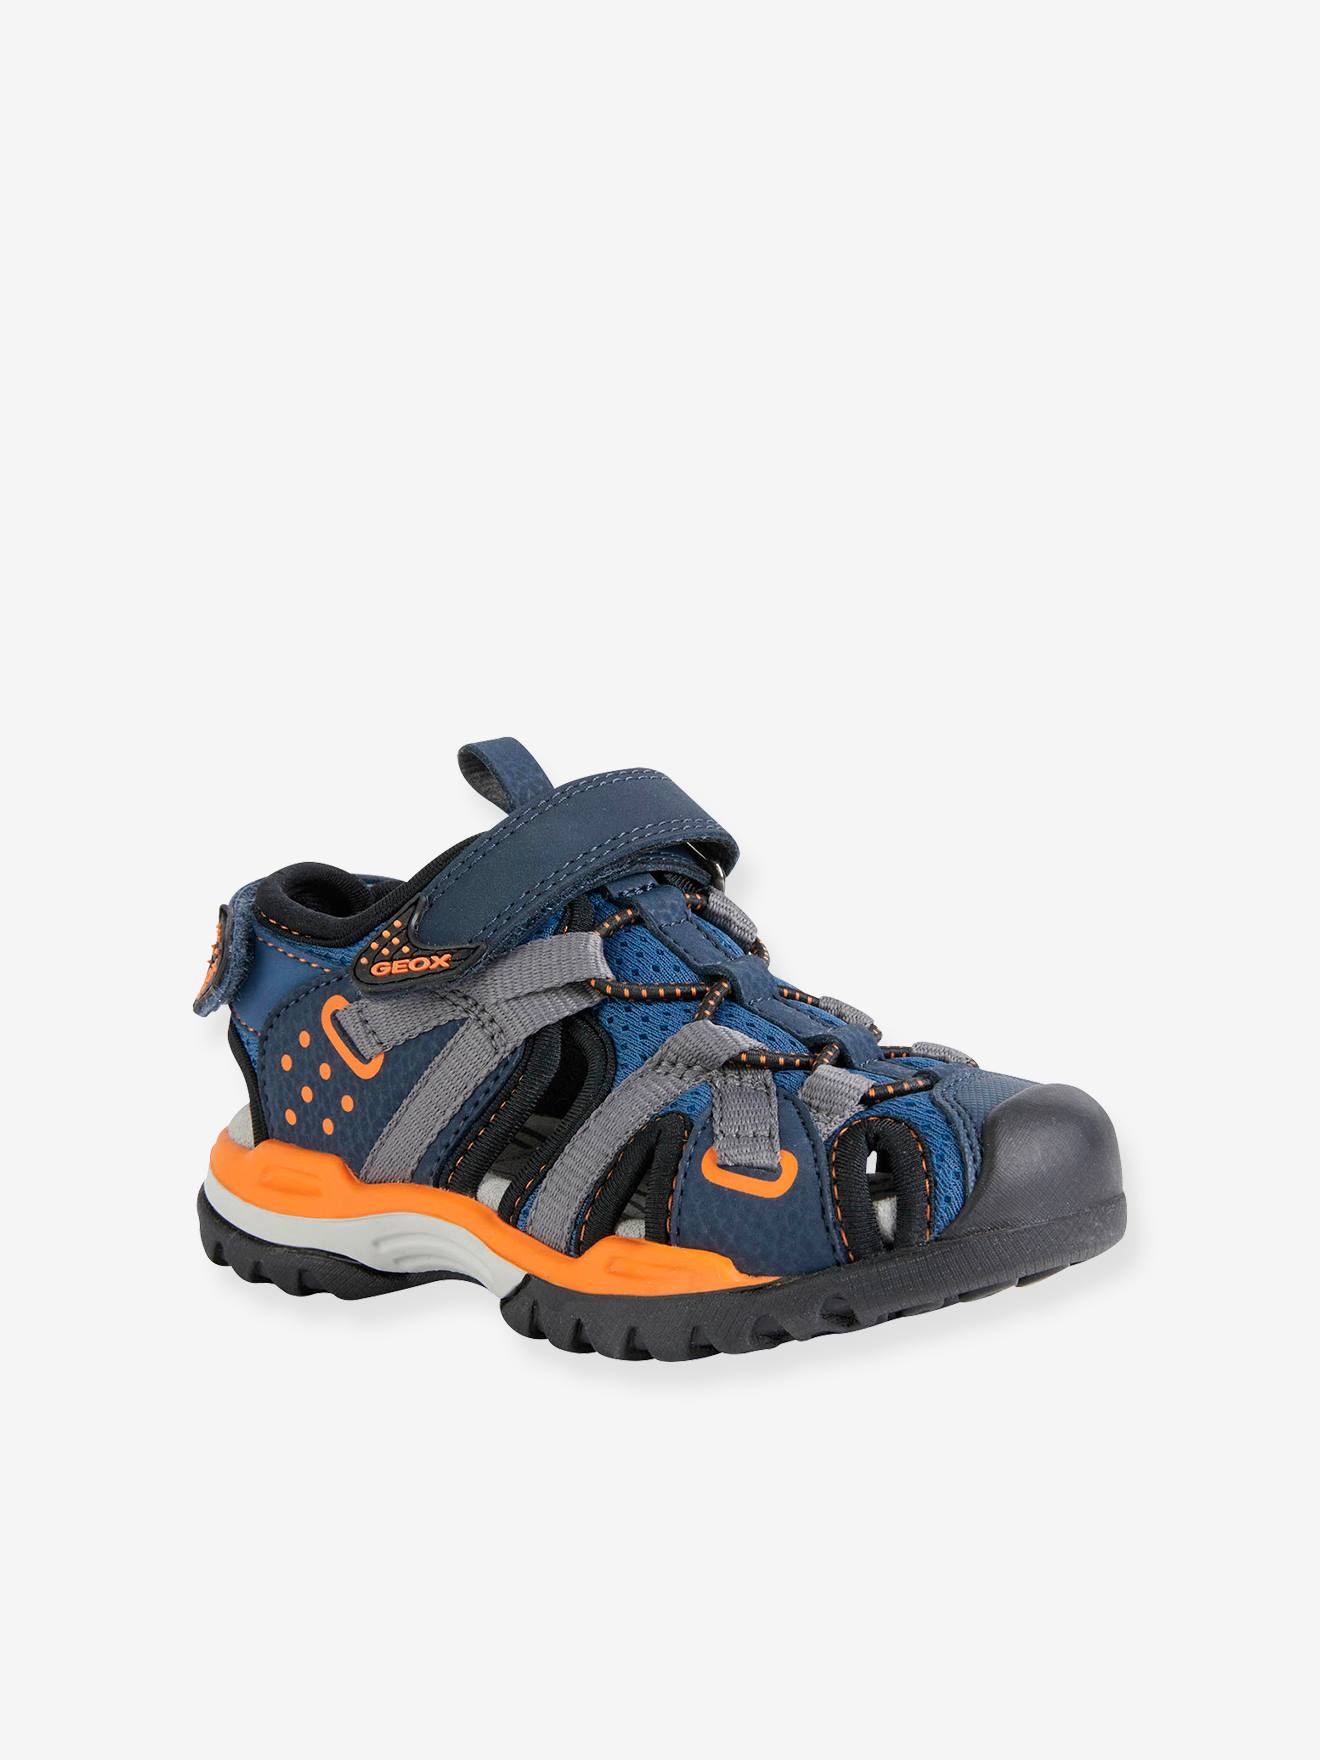 toda la vida Dinamarca Probablemente Sandals for Children, Borealis B by GEOX® - blue light solid, Shoes